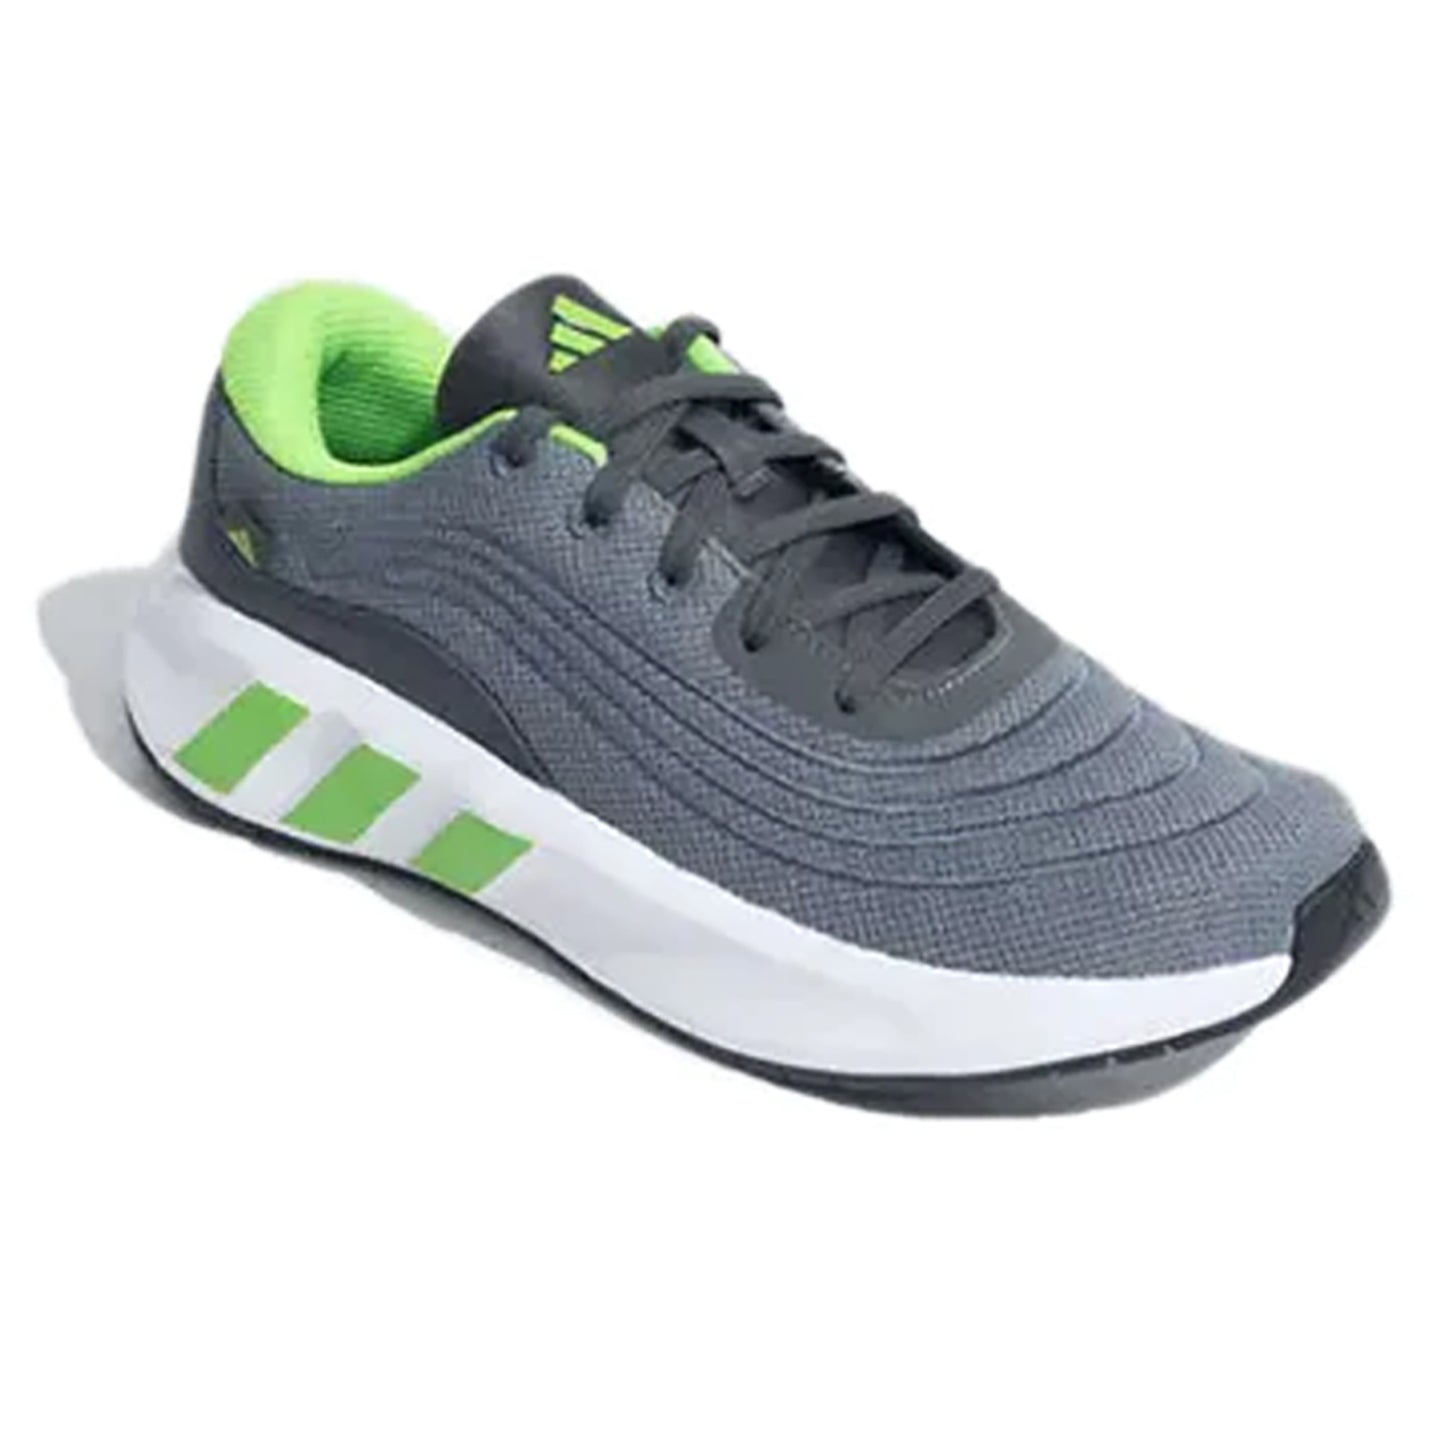 Adidas Men's Cloud Tec Running Shoe, Mlead/Grey six/Lucid Lemon - Best Price online Prokicksports.com